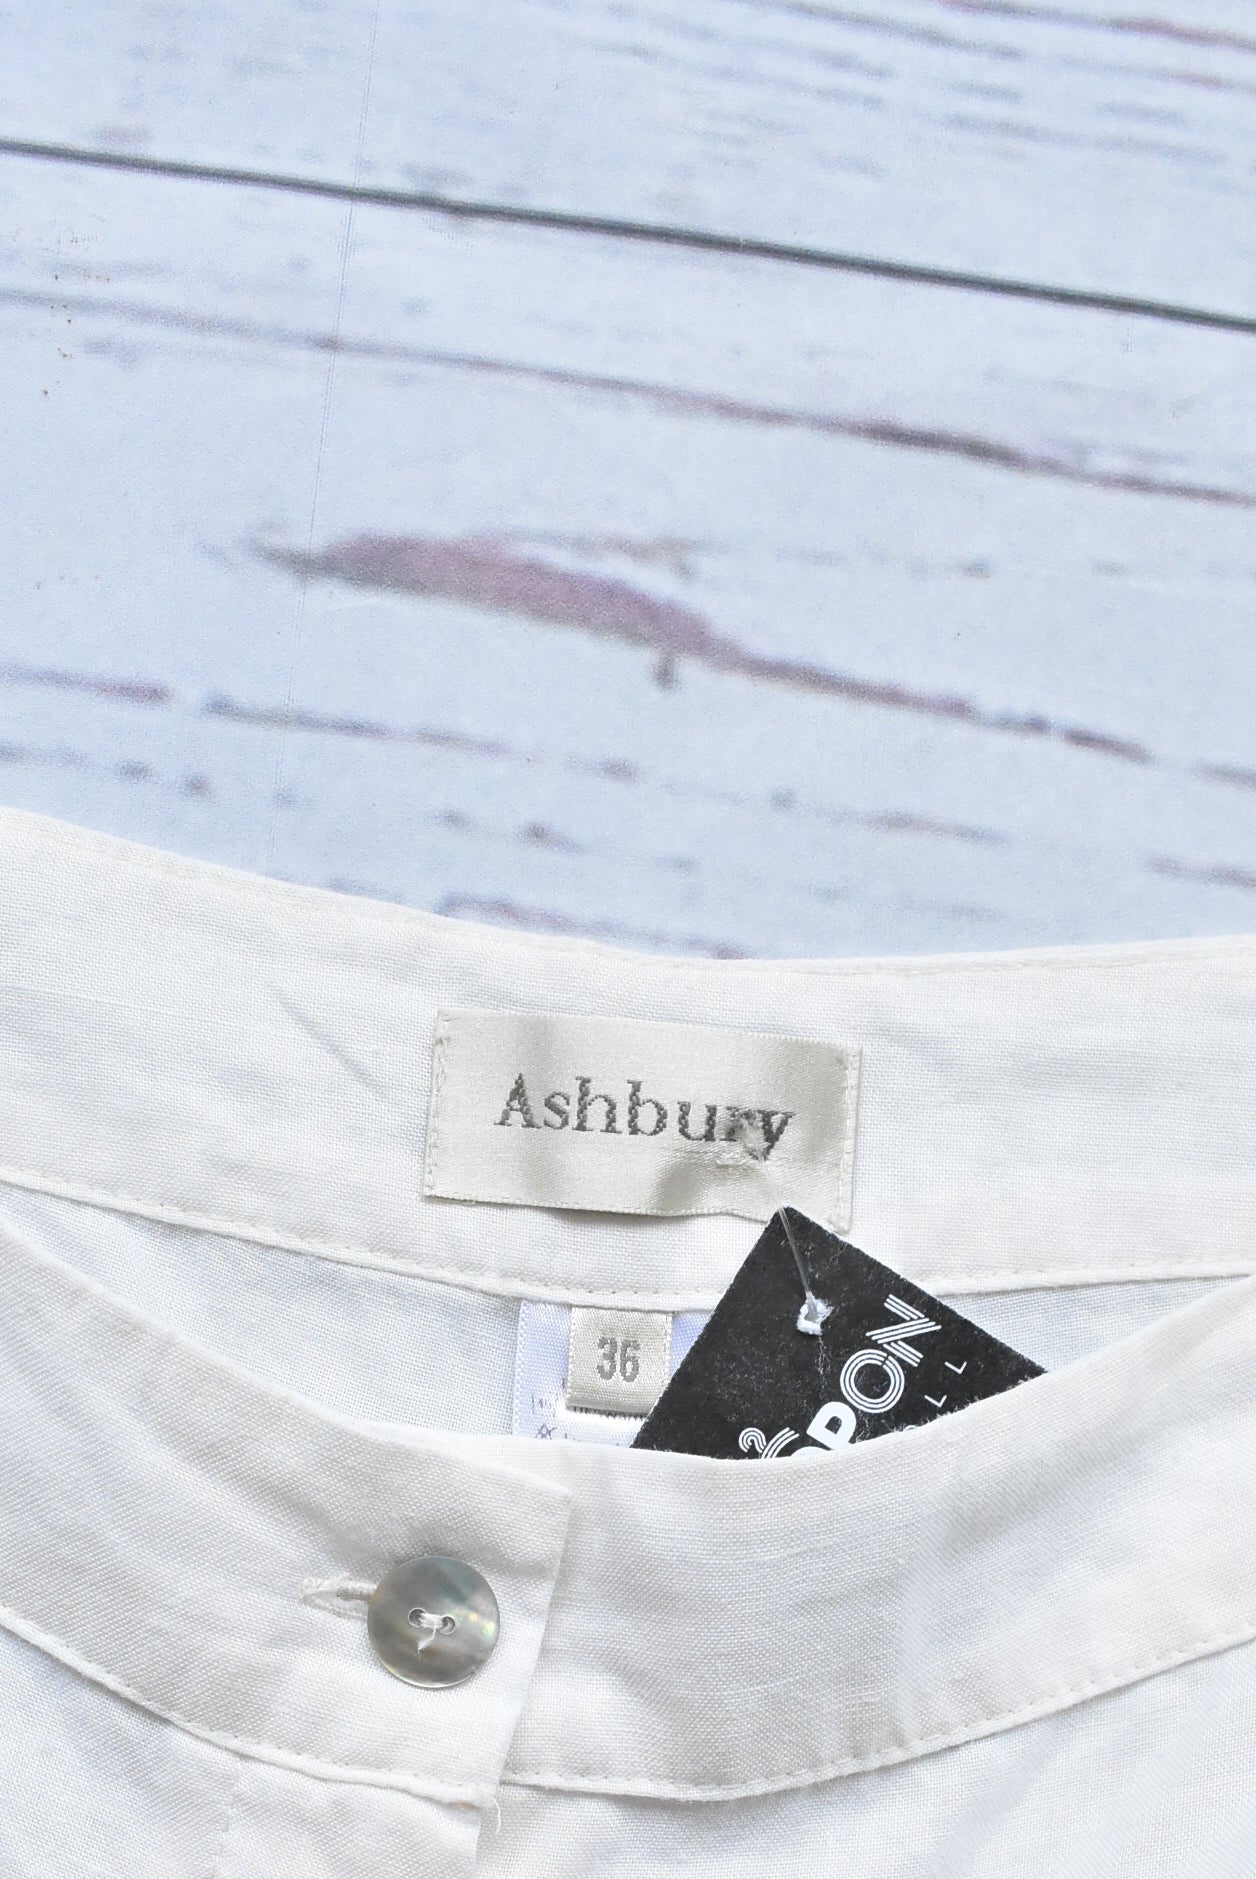 Ashbury ramie trousers, 36